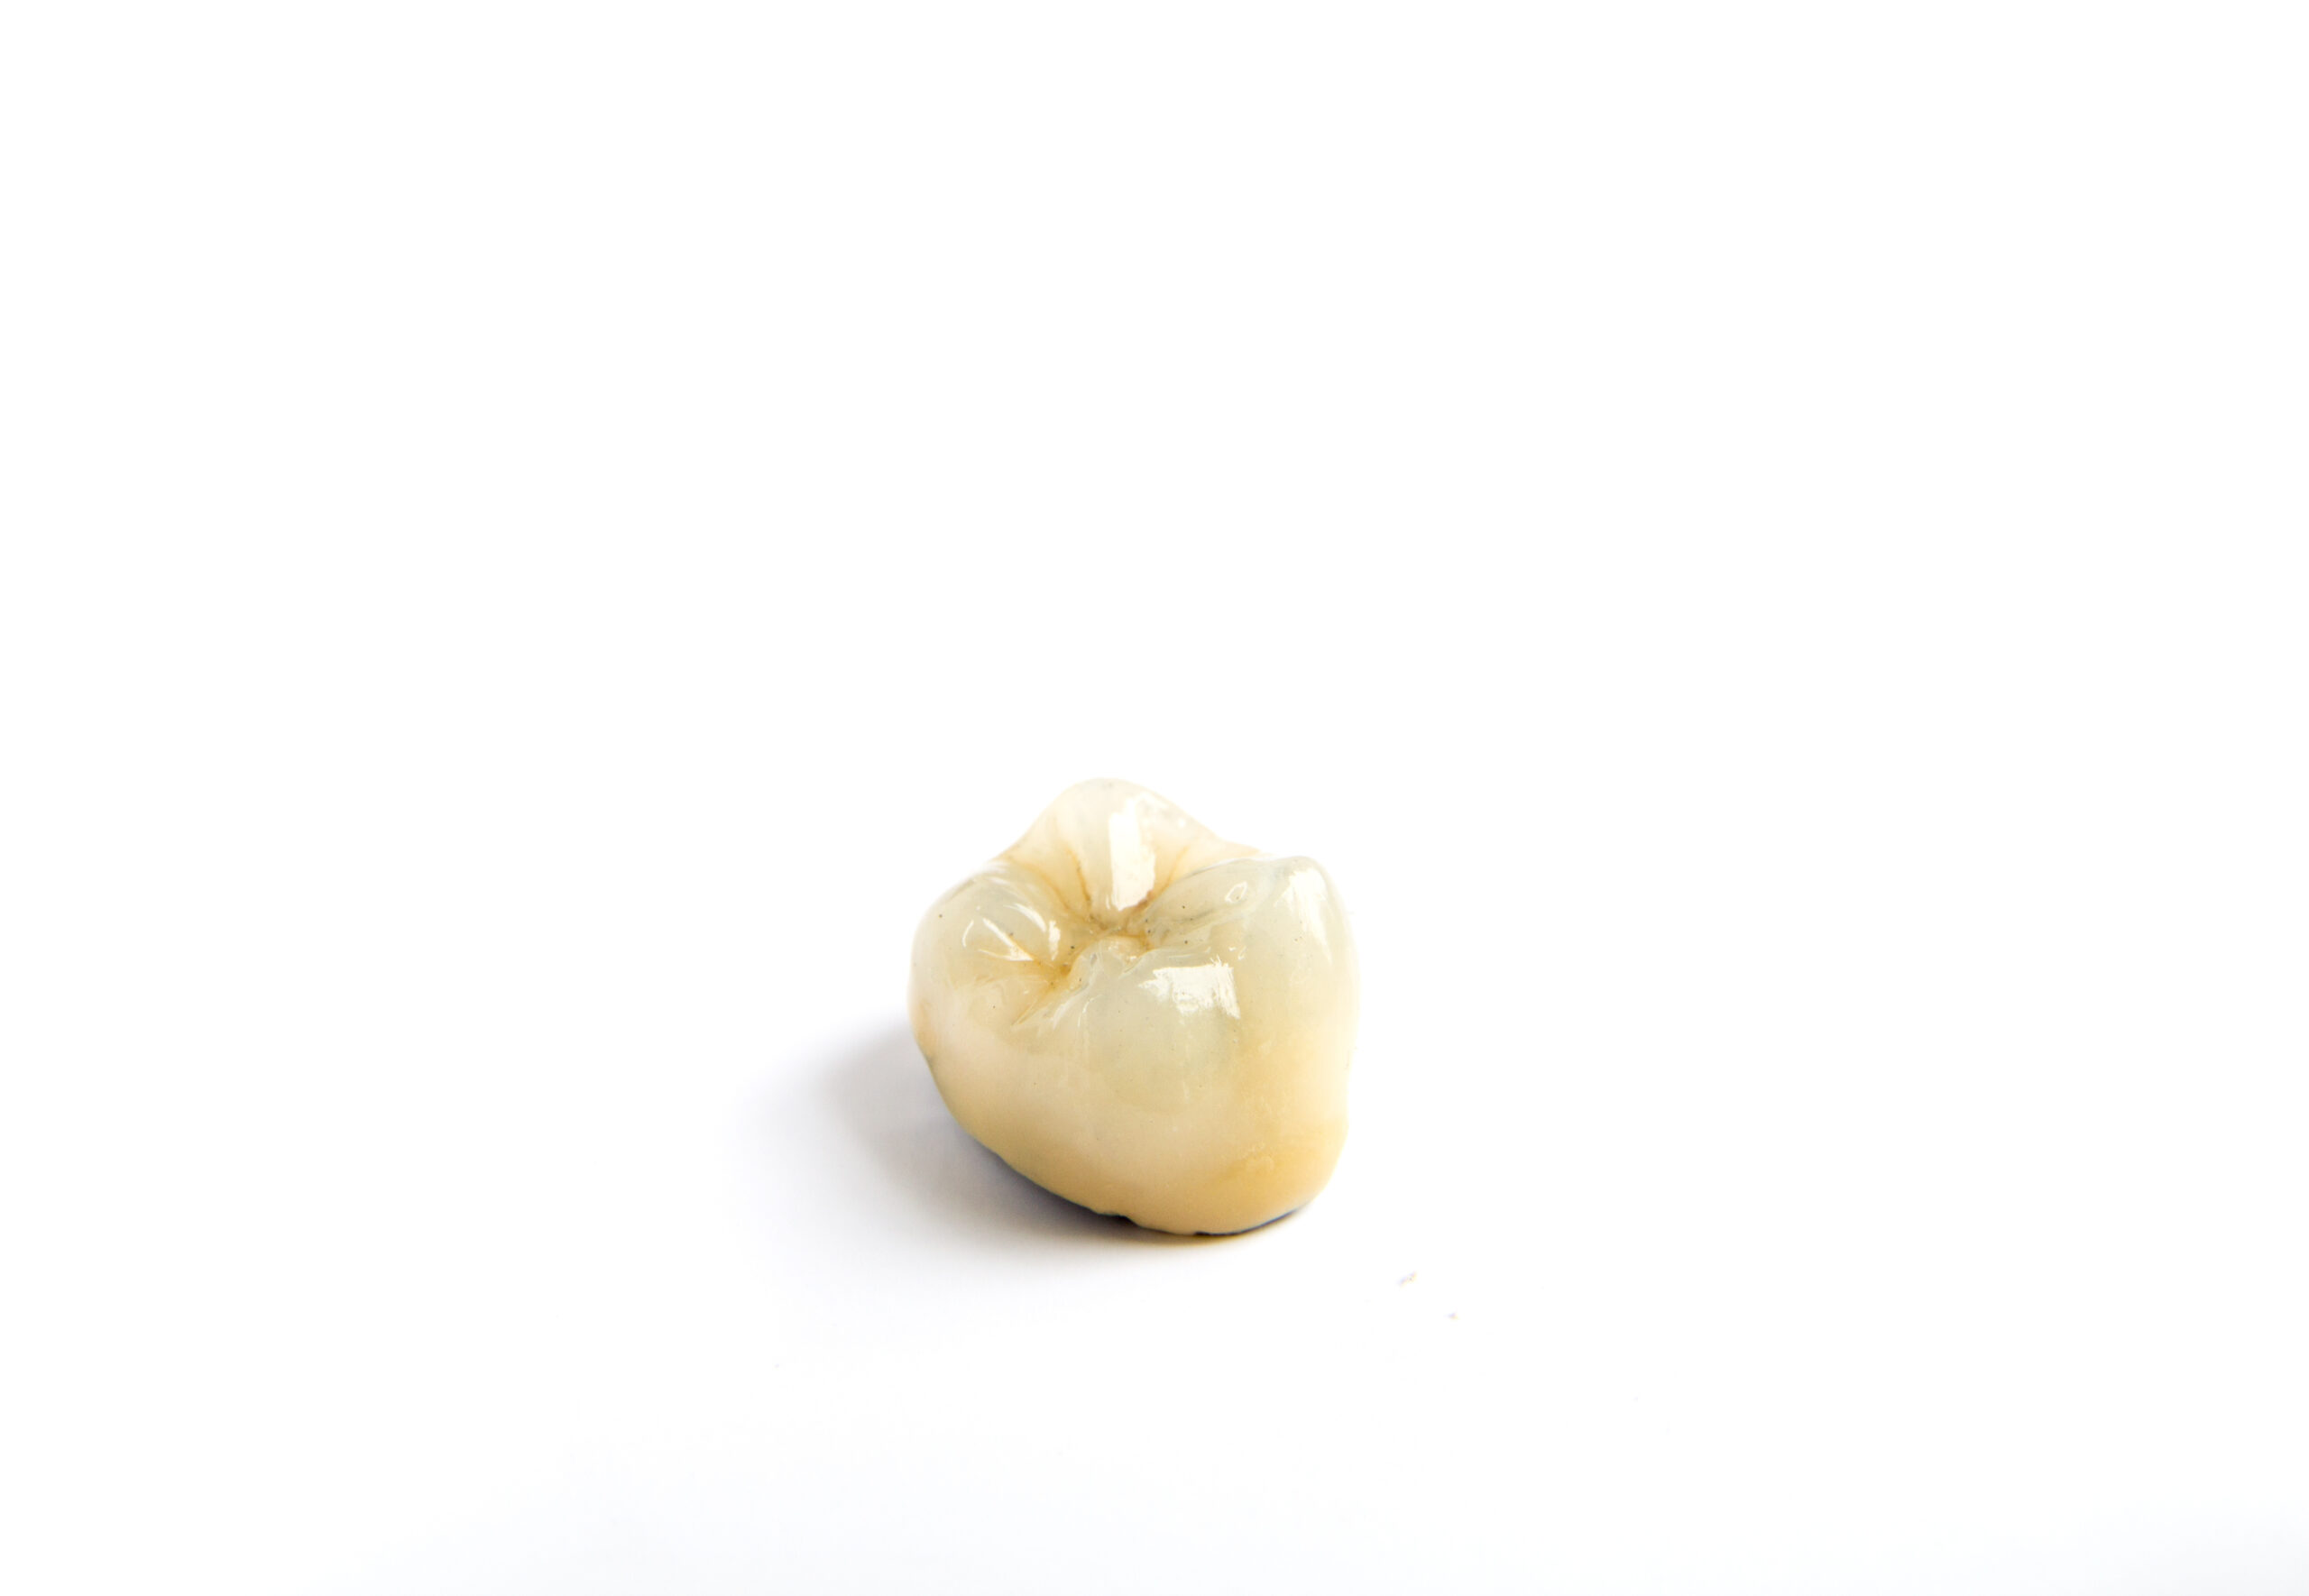 leawood dental crowns